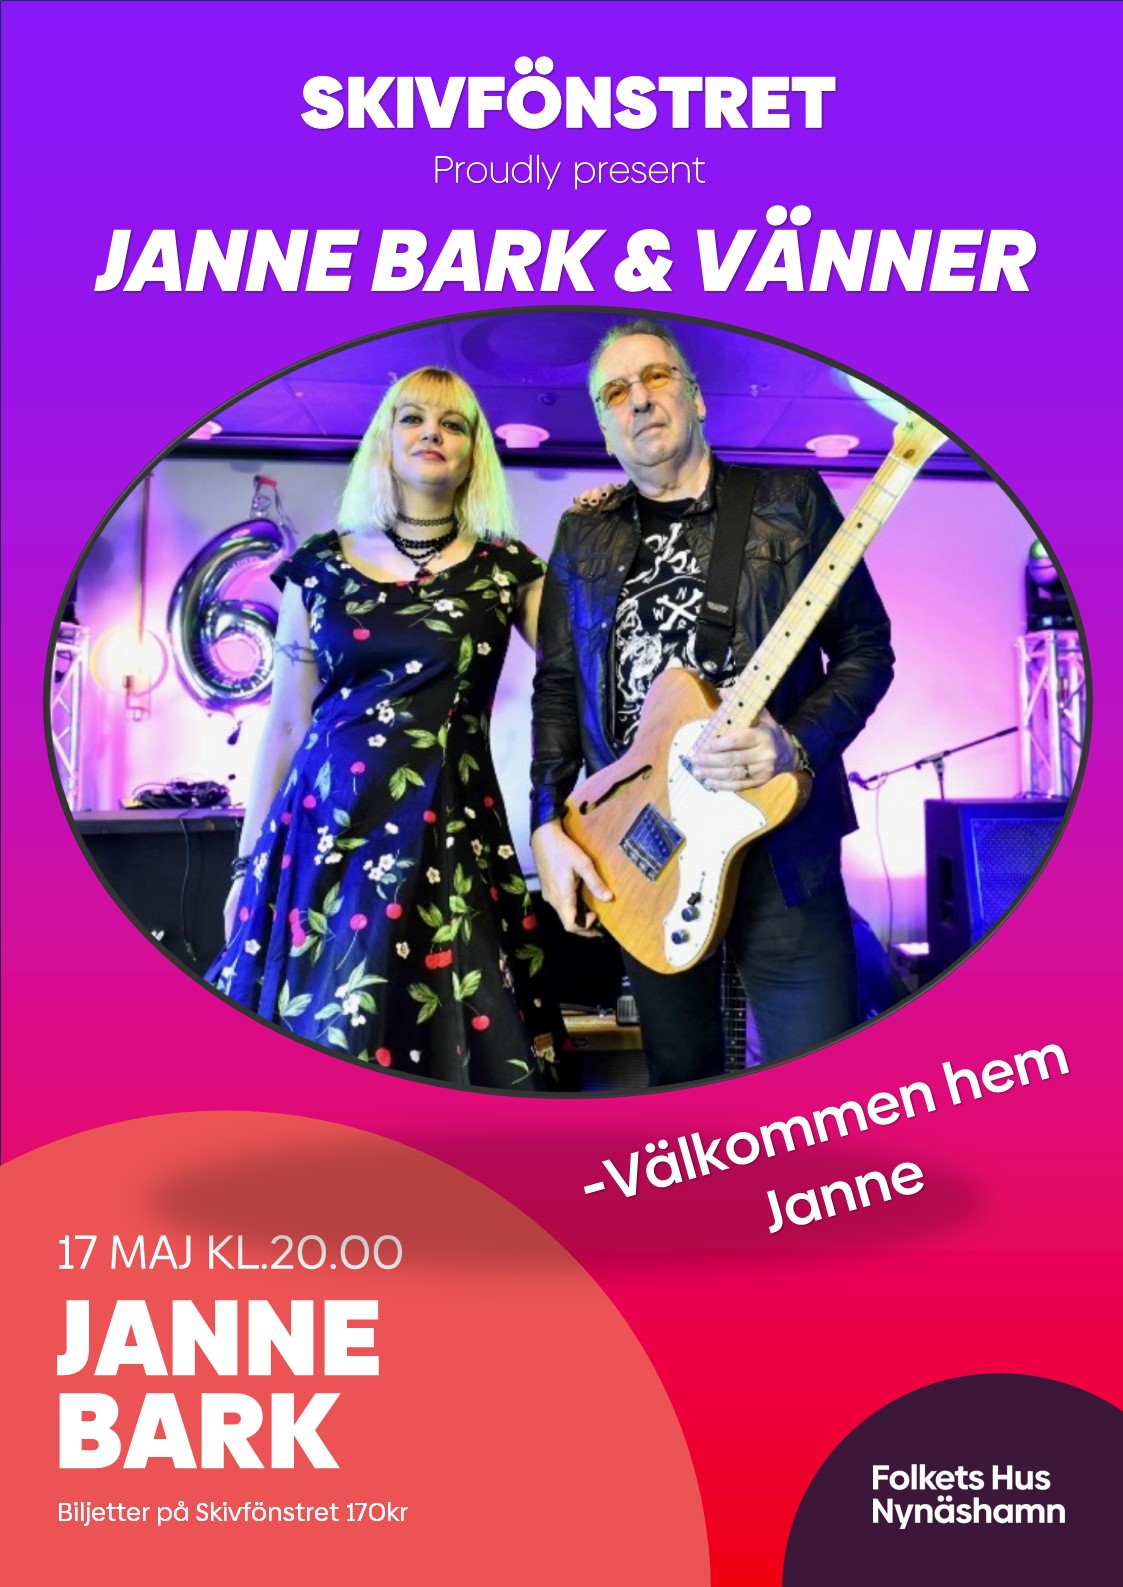 Janne Bark & vänner